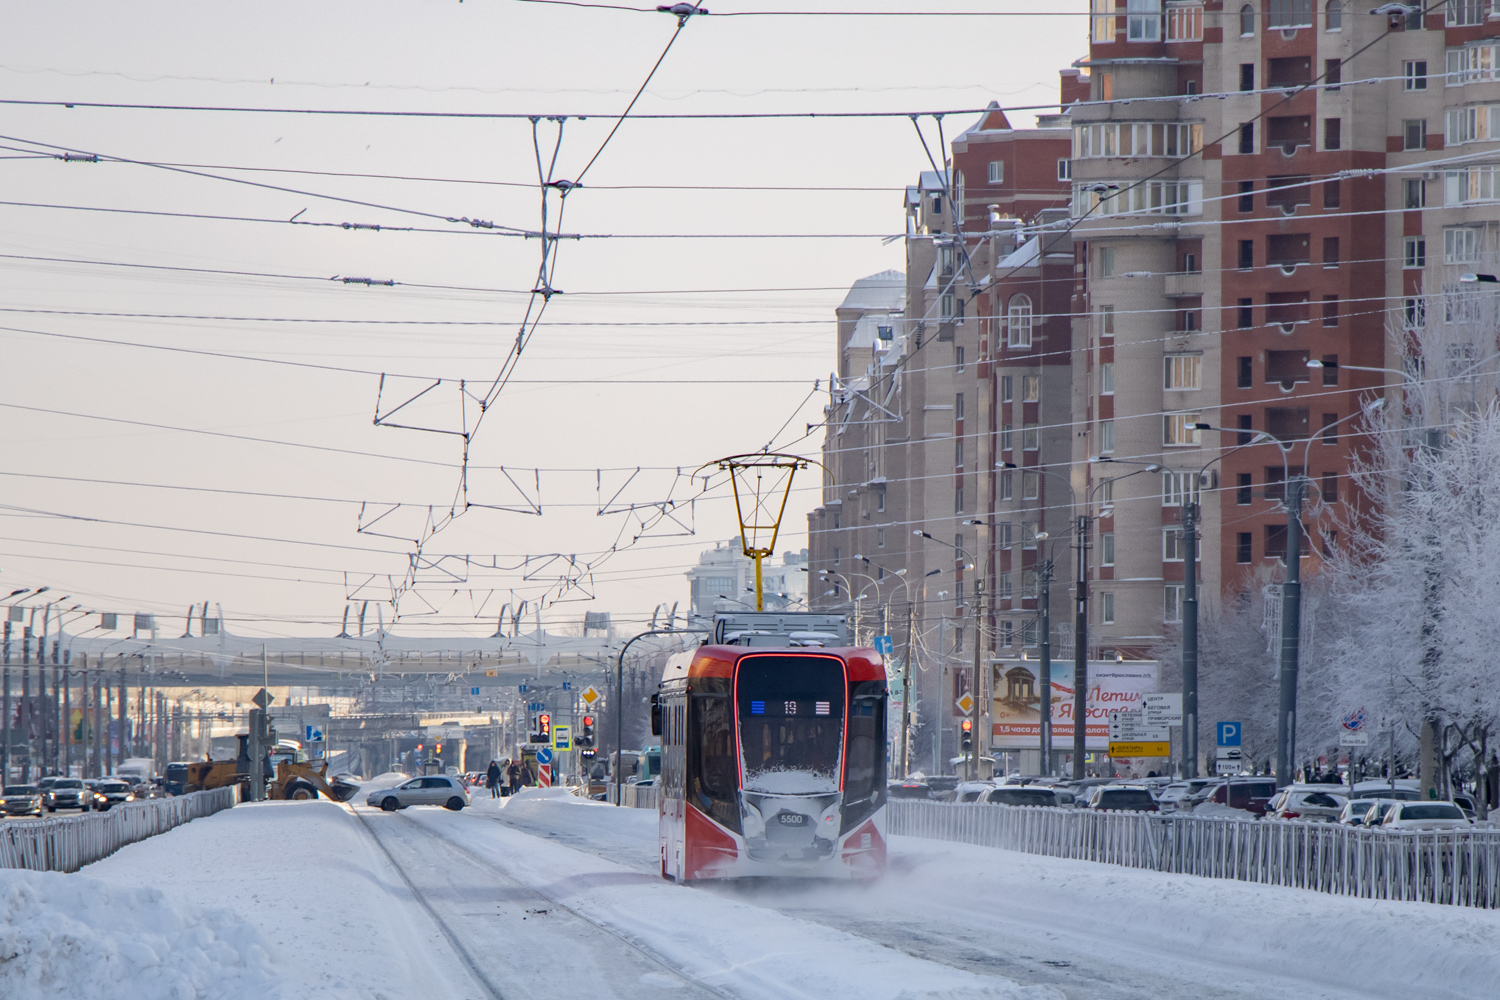 Saint-Petersburg, 71-628-02 č. 5500; Saint-Petersburg — Tram lines and infrastructure